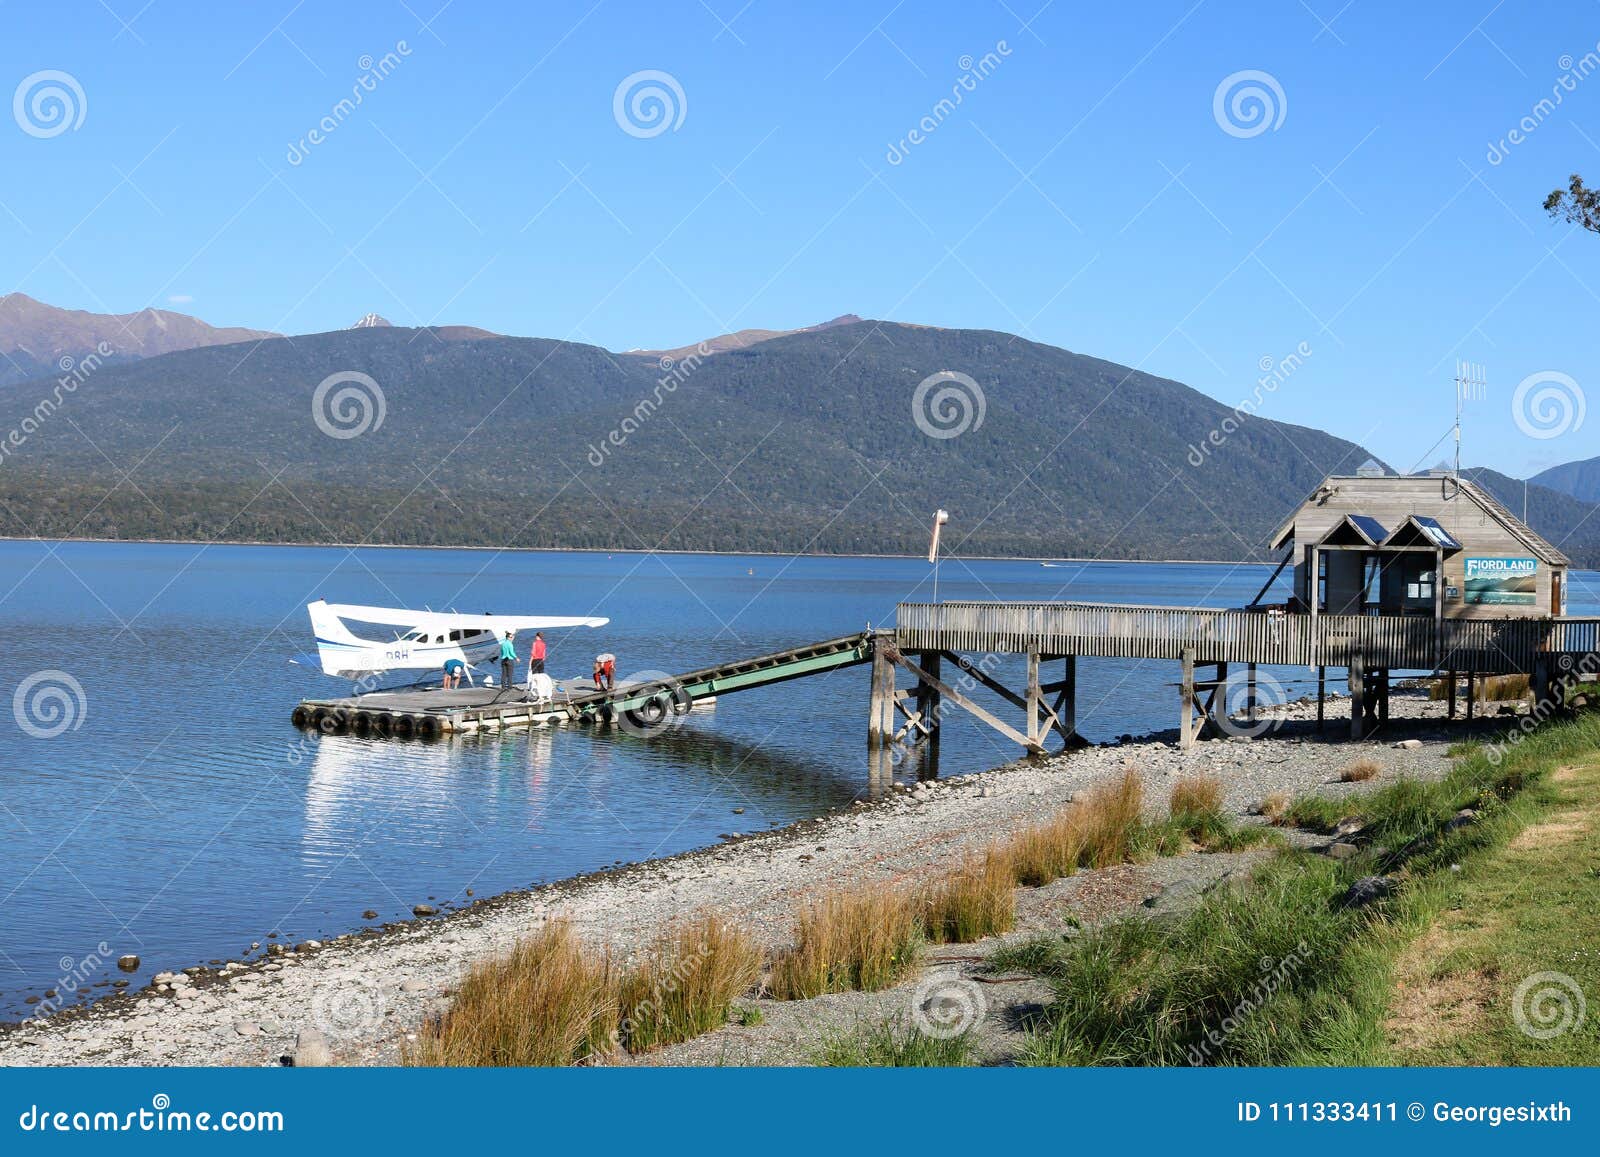 Boarding A Seaplane On Lake Te Anau New Zealand Editorial Photo Image Of Southland Board 111333411